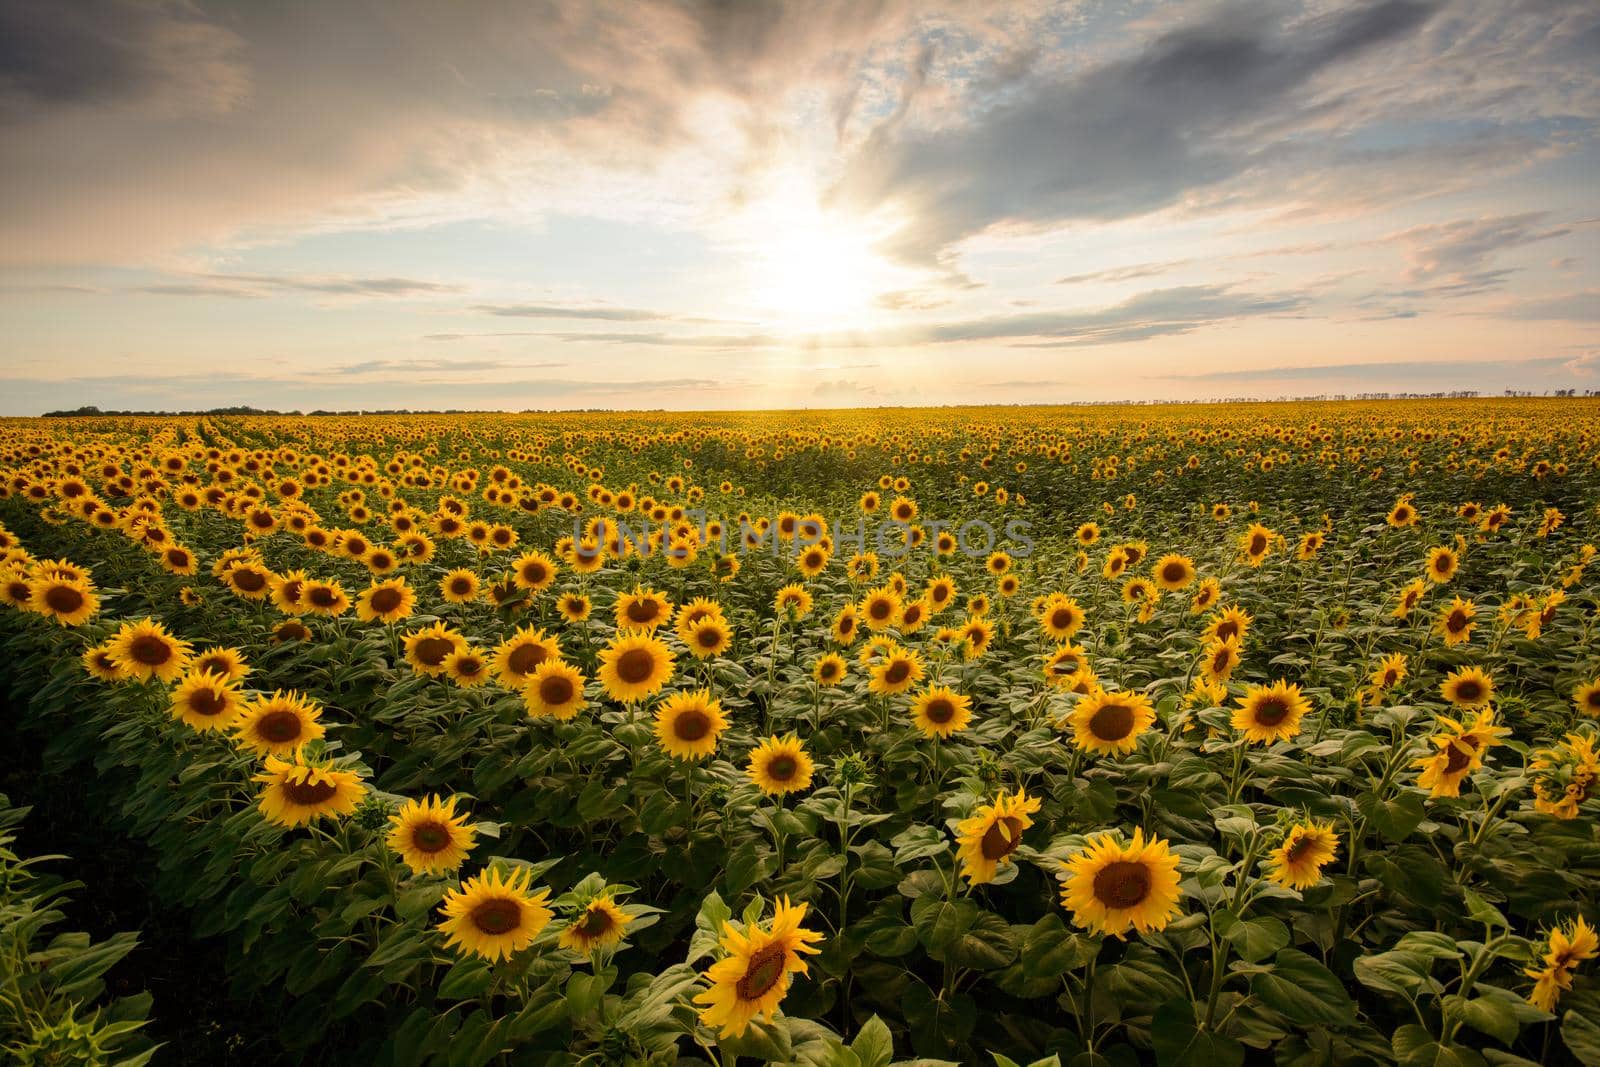 Field of sunflowers at sunset by VitaliiPetrushenko